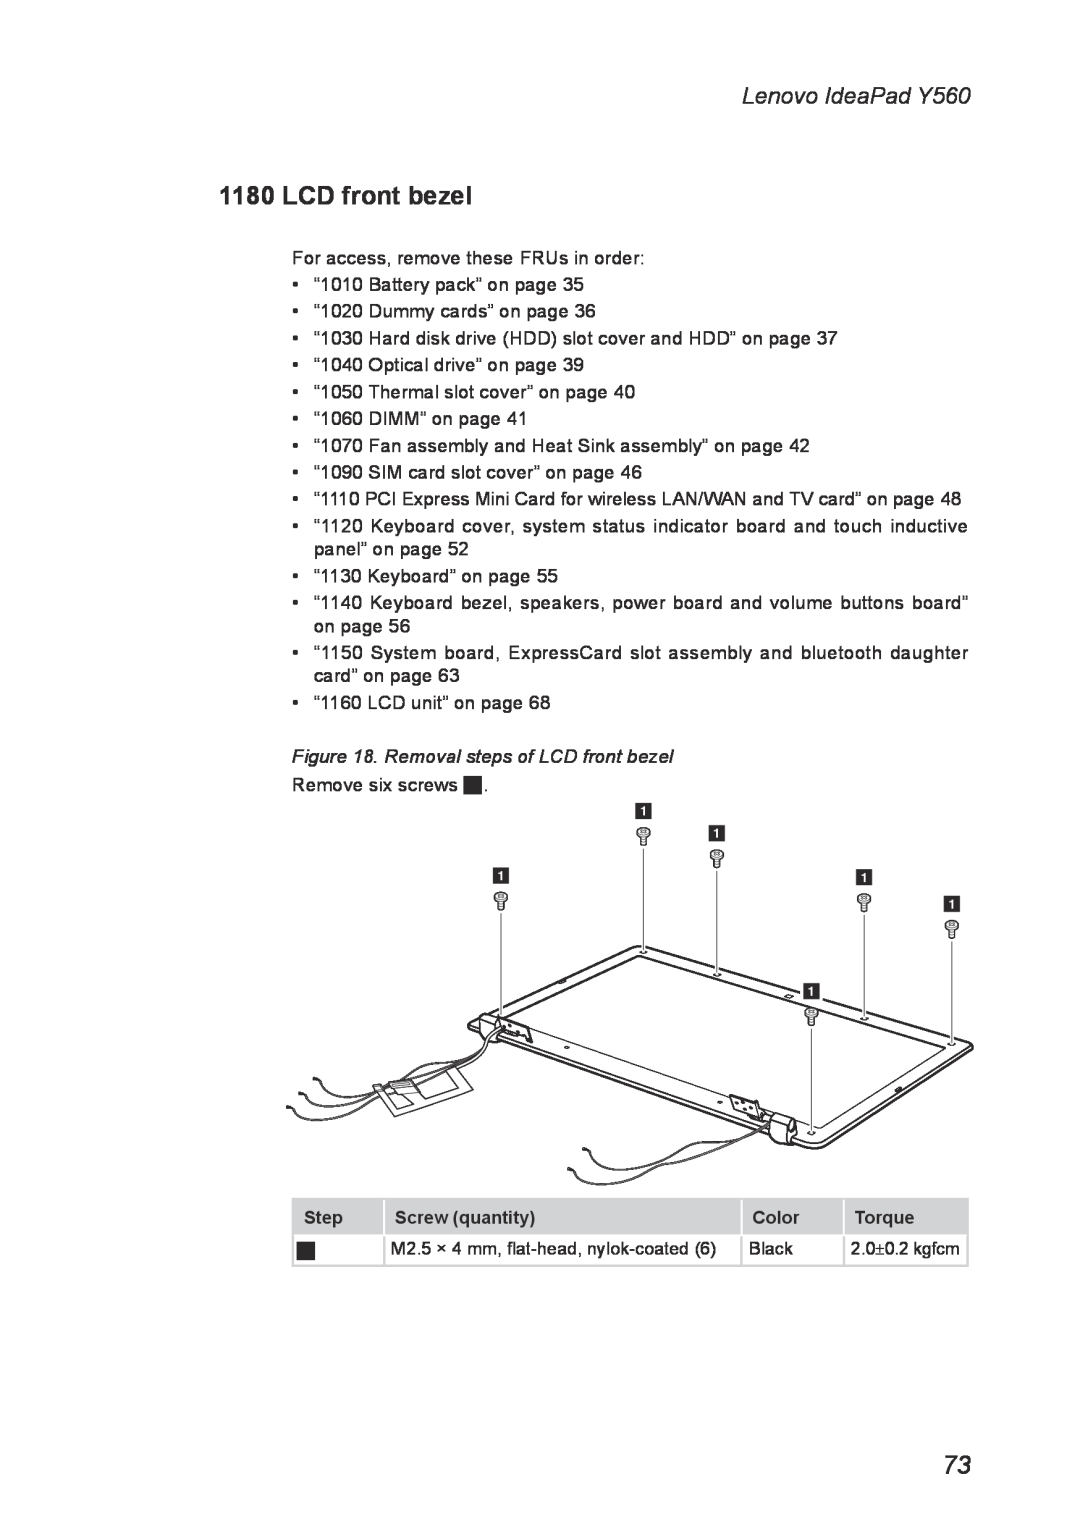 Lenovo manual Removal steps of LCD front bezel Remove six screws, Lenovo IdeaPad Y560 